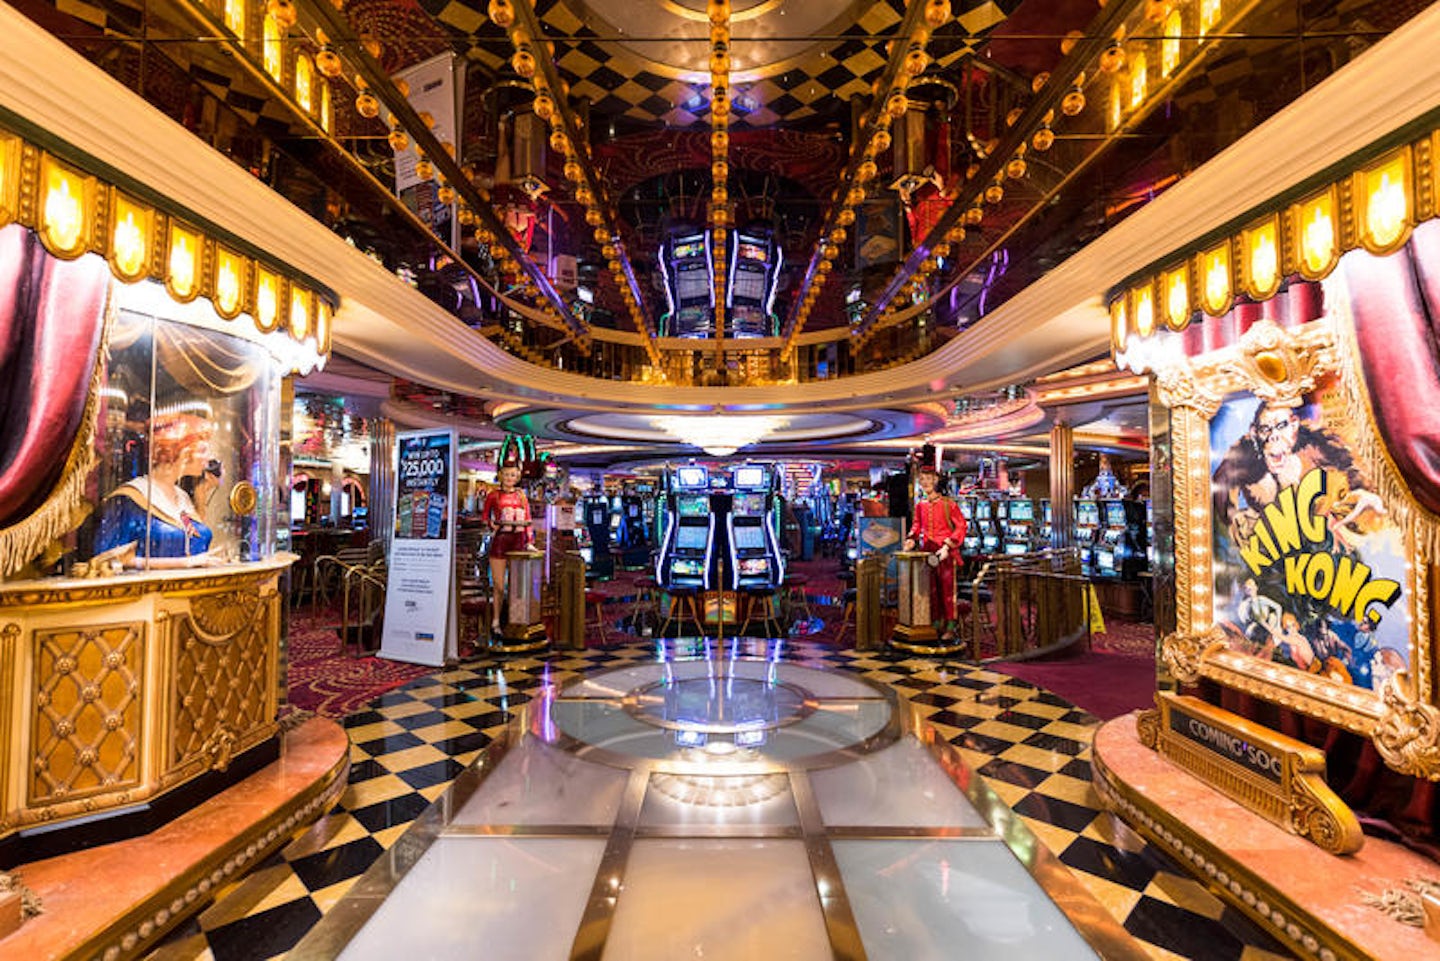 Casino Royale on Adventure of the Seas